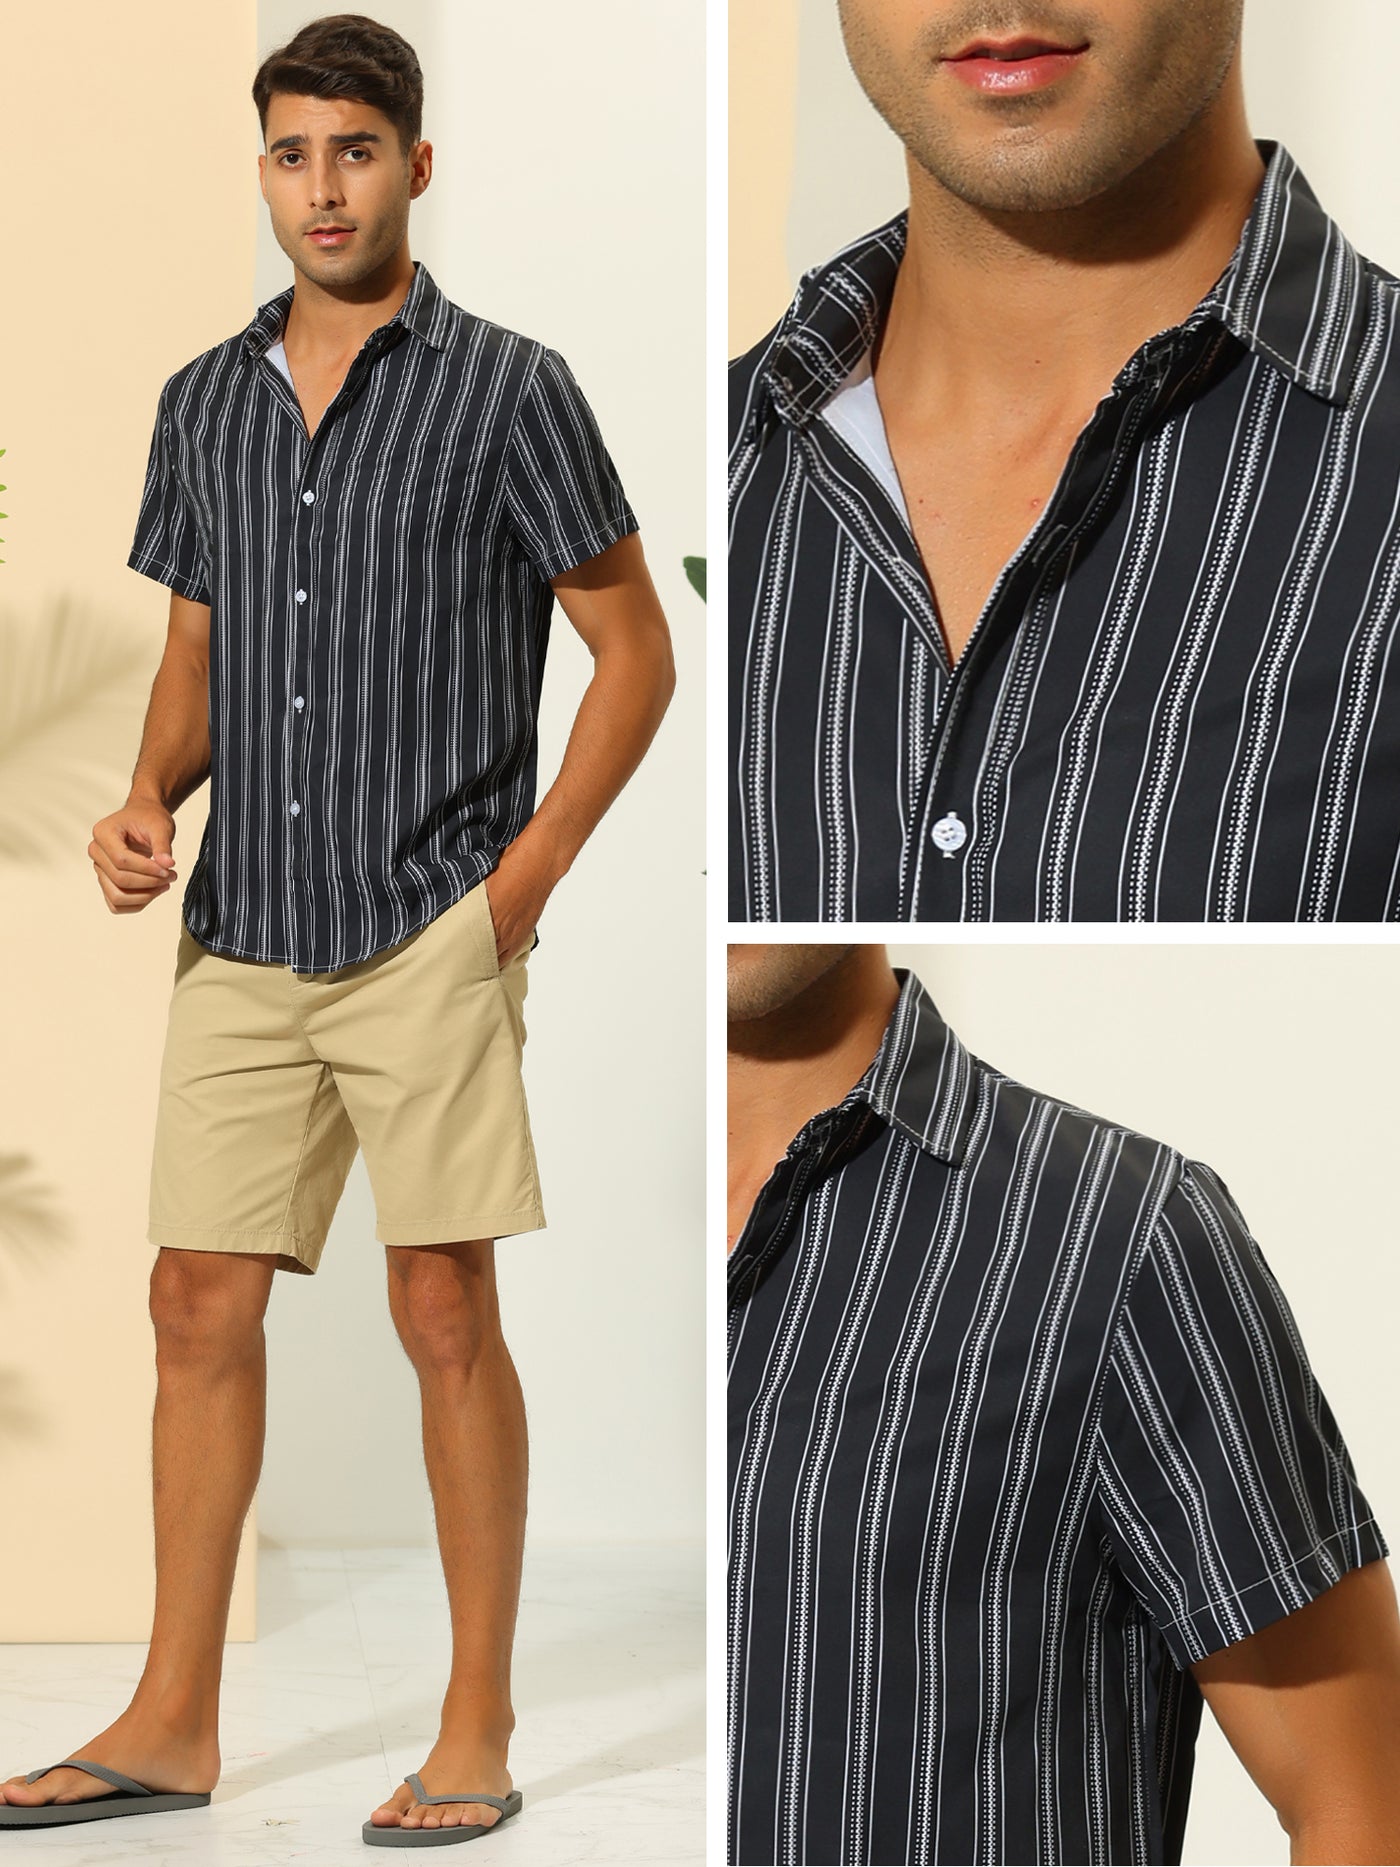 Bublédon Striped Shirts for Men's Summer Short Sleeves Button Down Beach Shirt